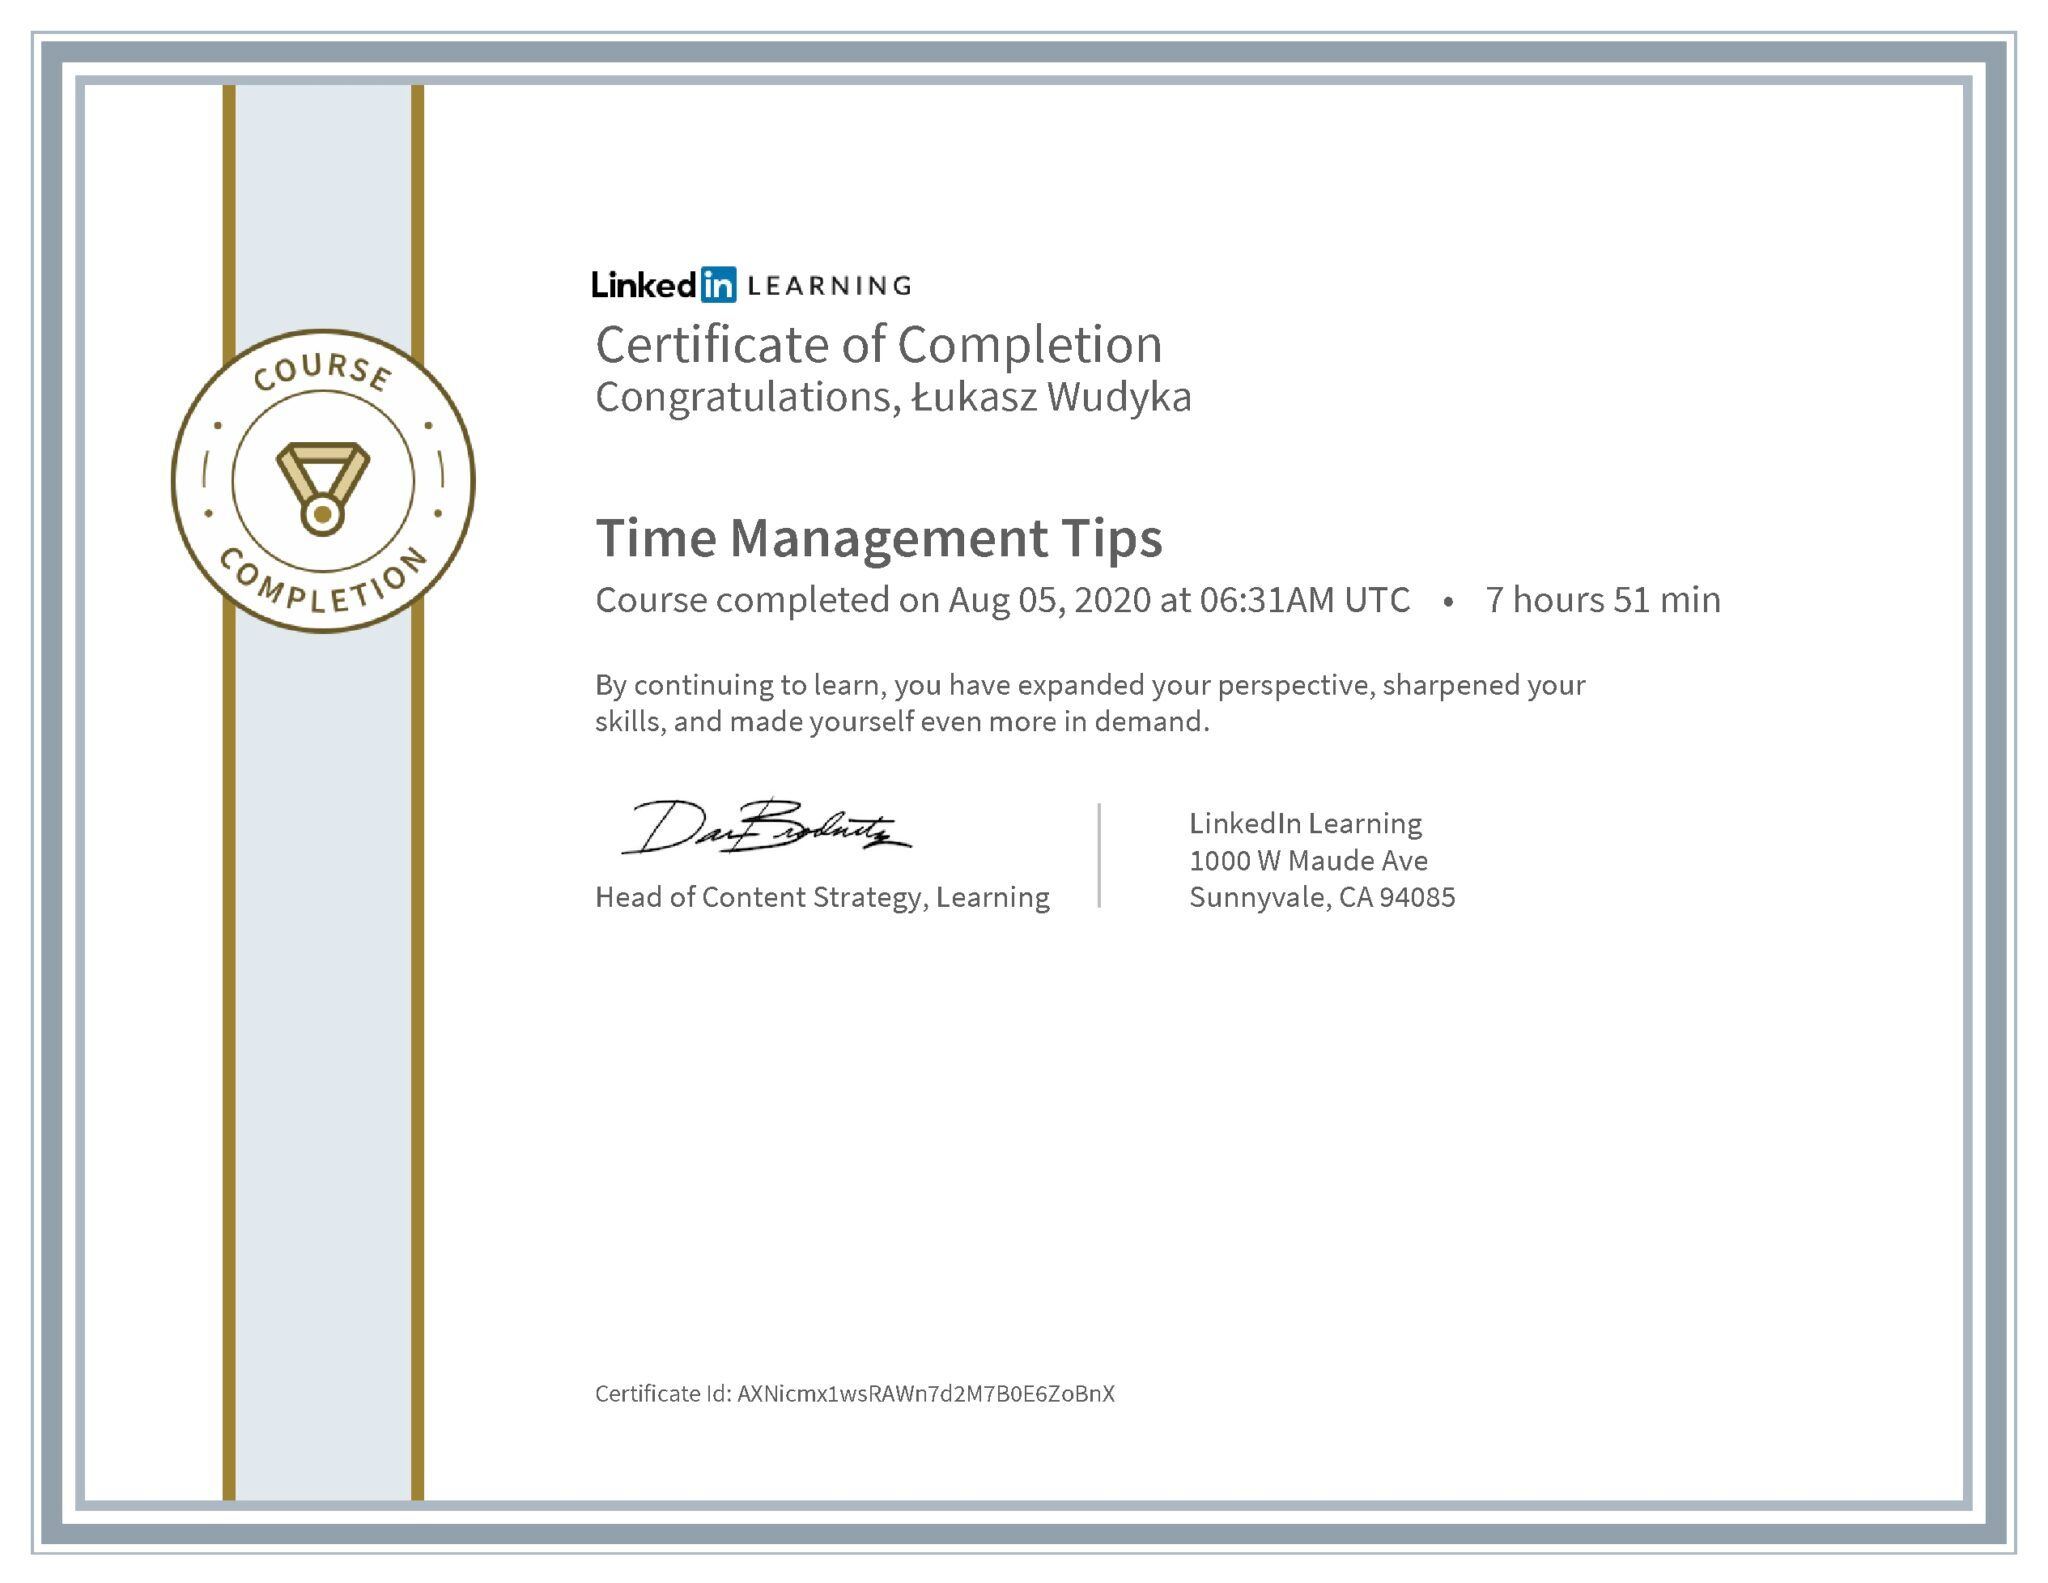 Łukasz Wudyka certyfikat LinkedIn Time Management Tips